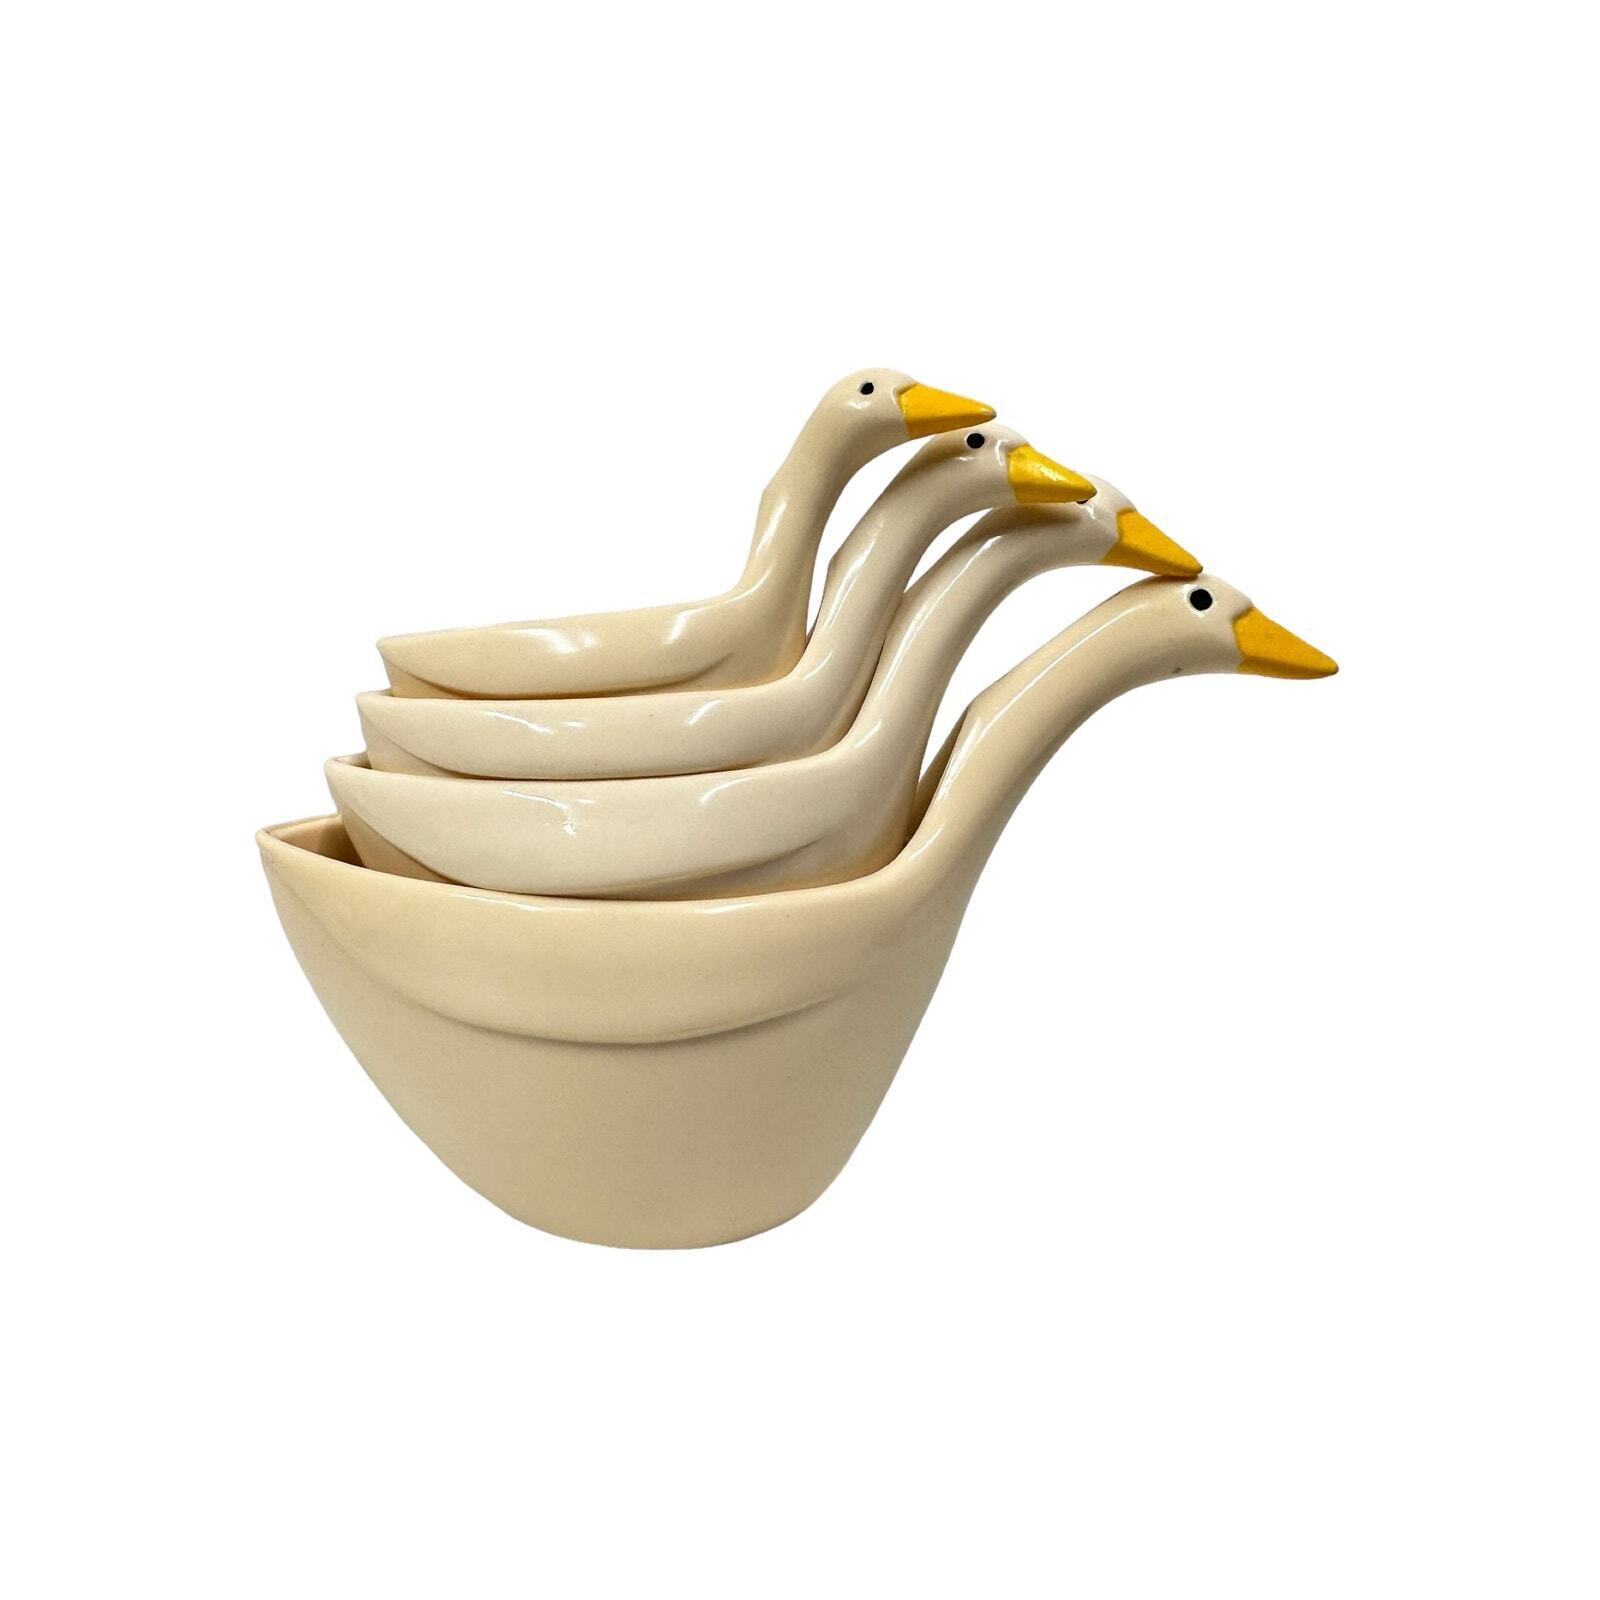 Vintage JSNY Stacking Measuring Cups Melamine Ducks Geese Set of 4.